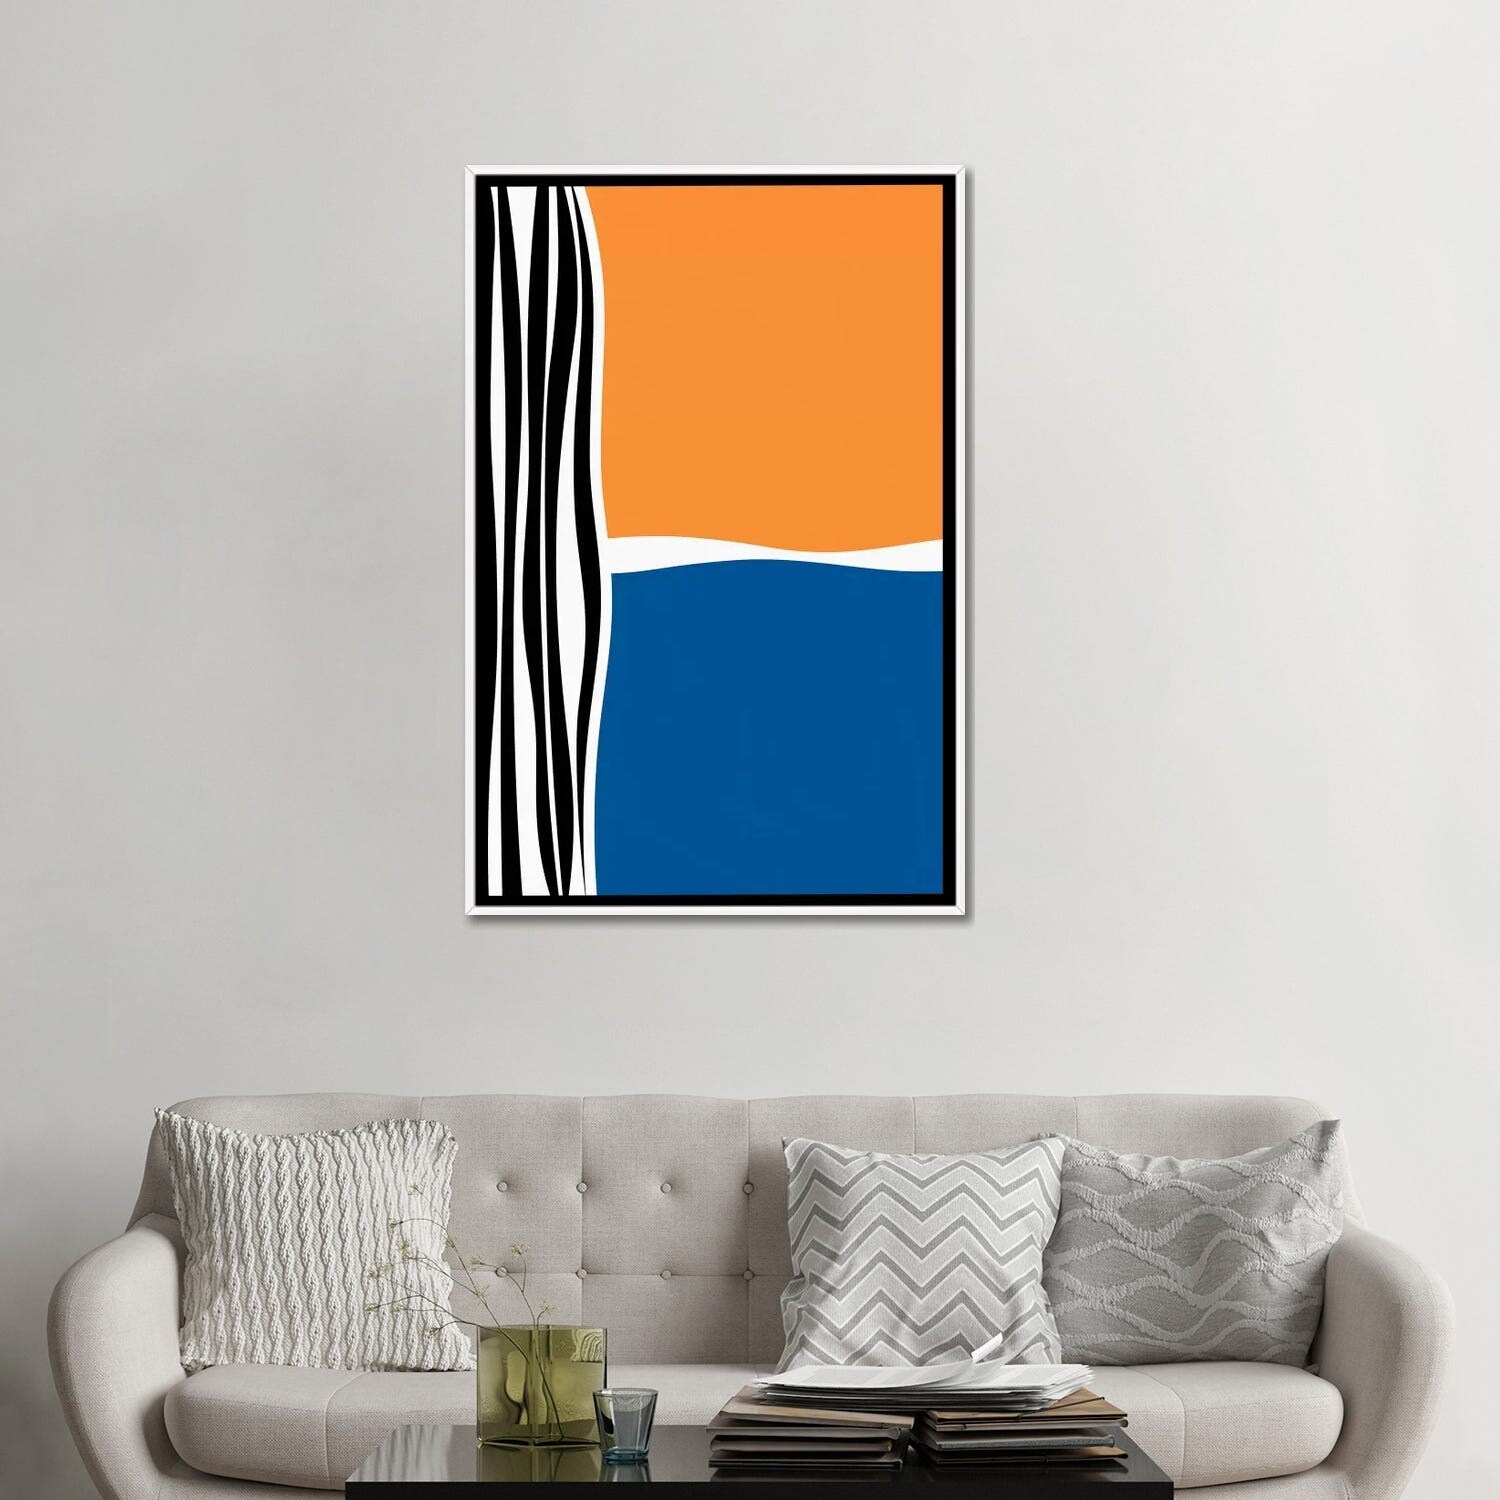 iCanvas "Irregular Shapes & Stripes - Orange & Blue" by Alisa Galitsyna Framed Canvas Print